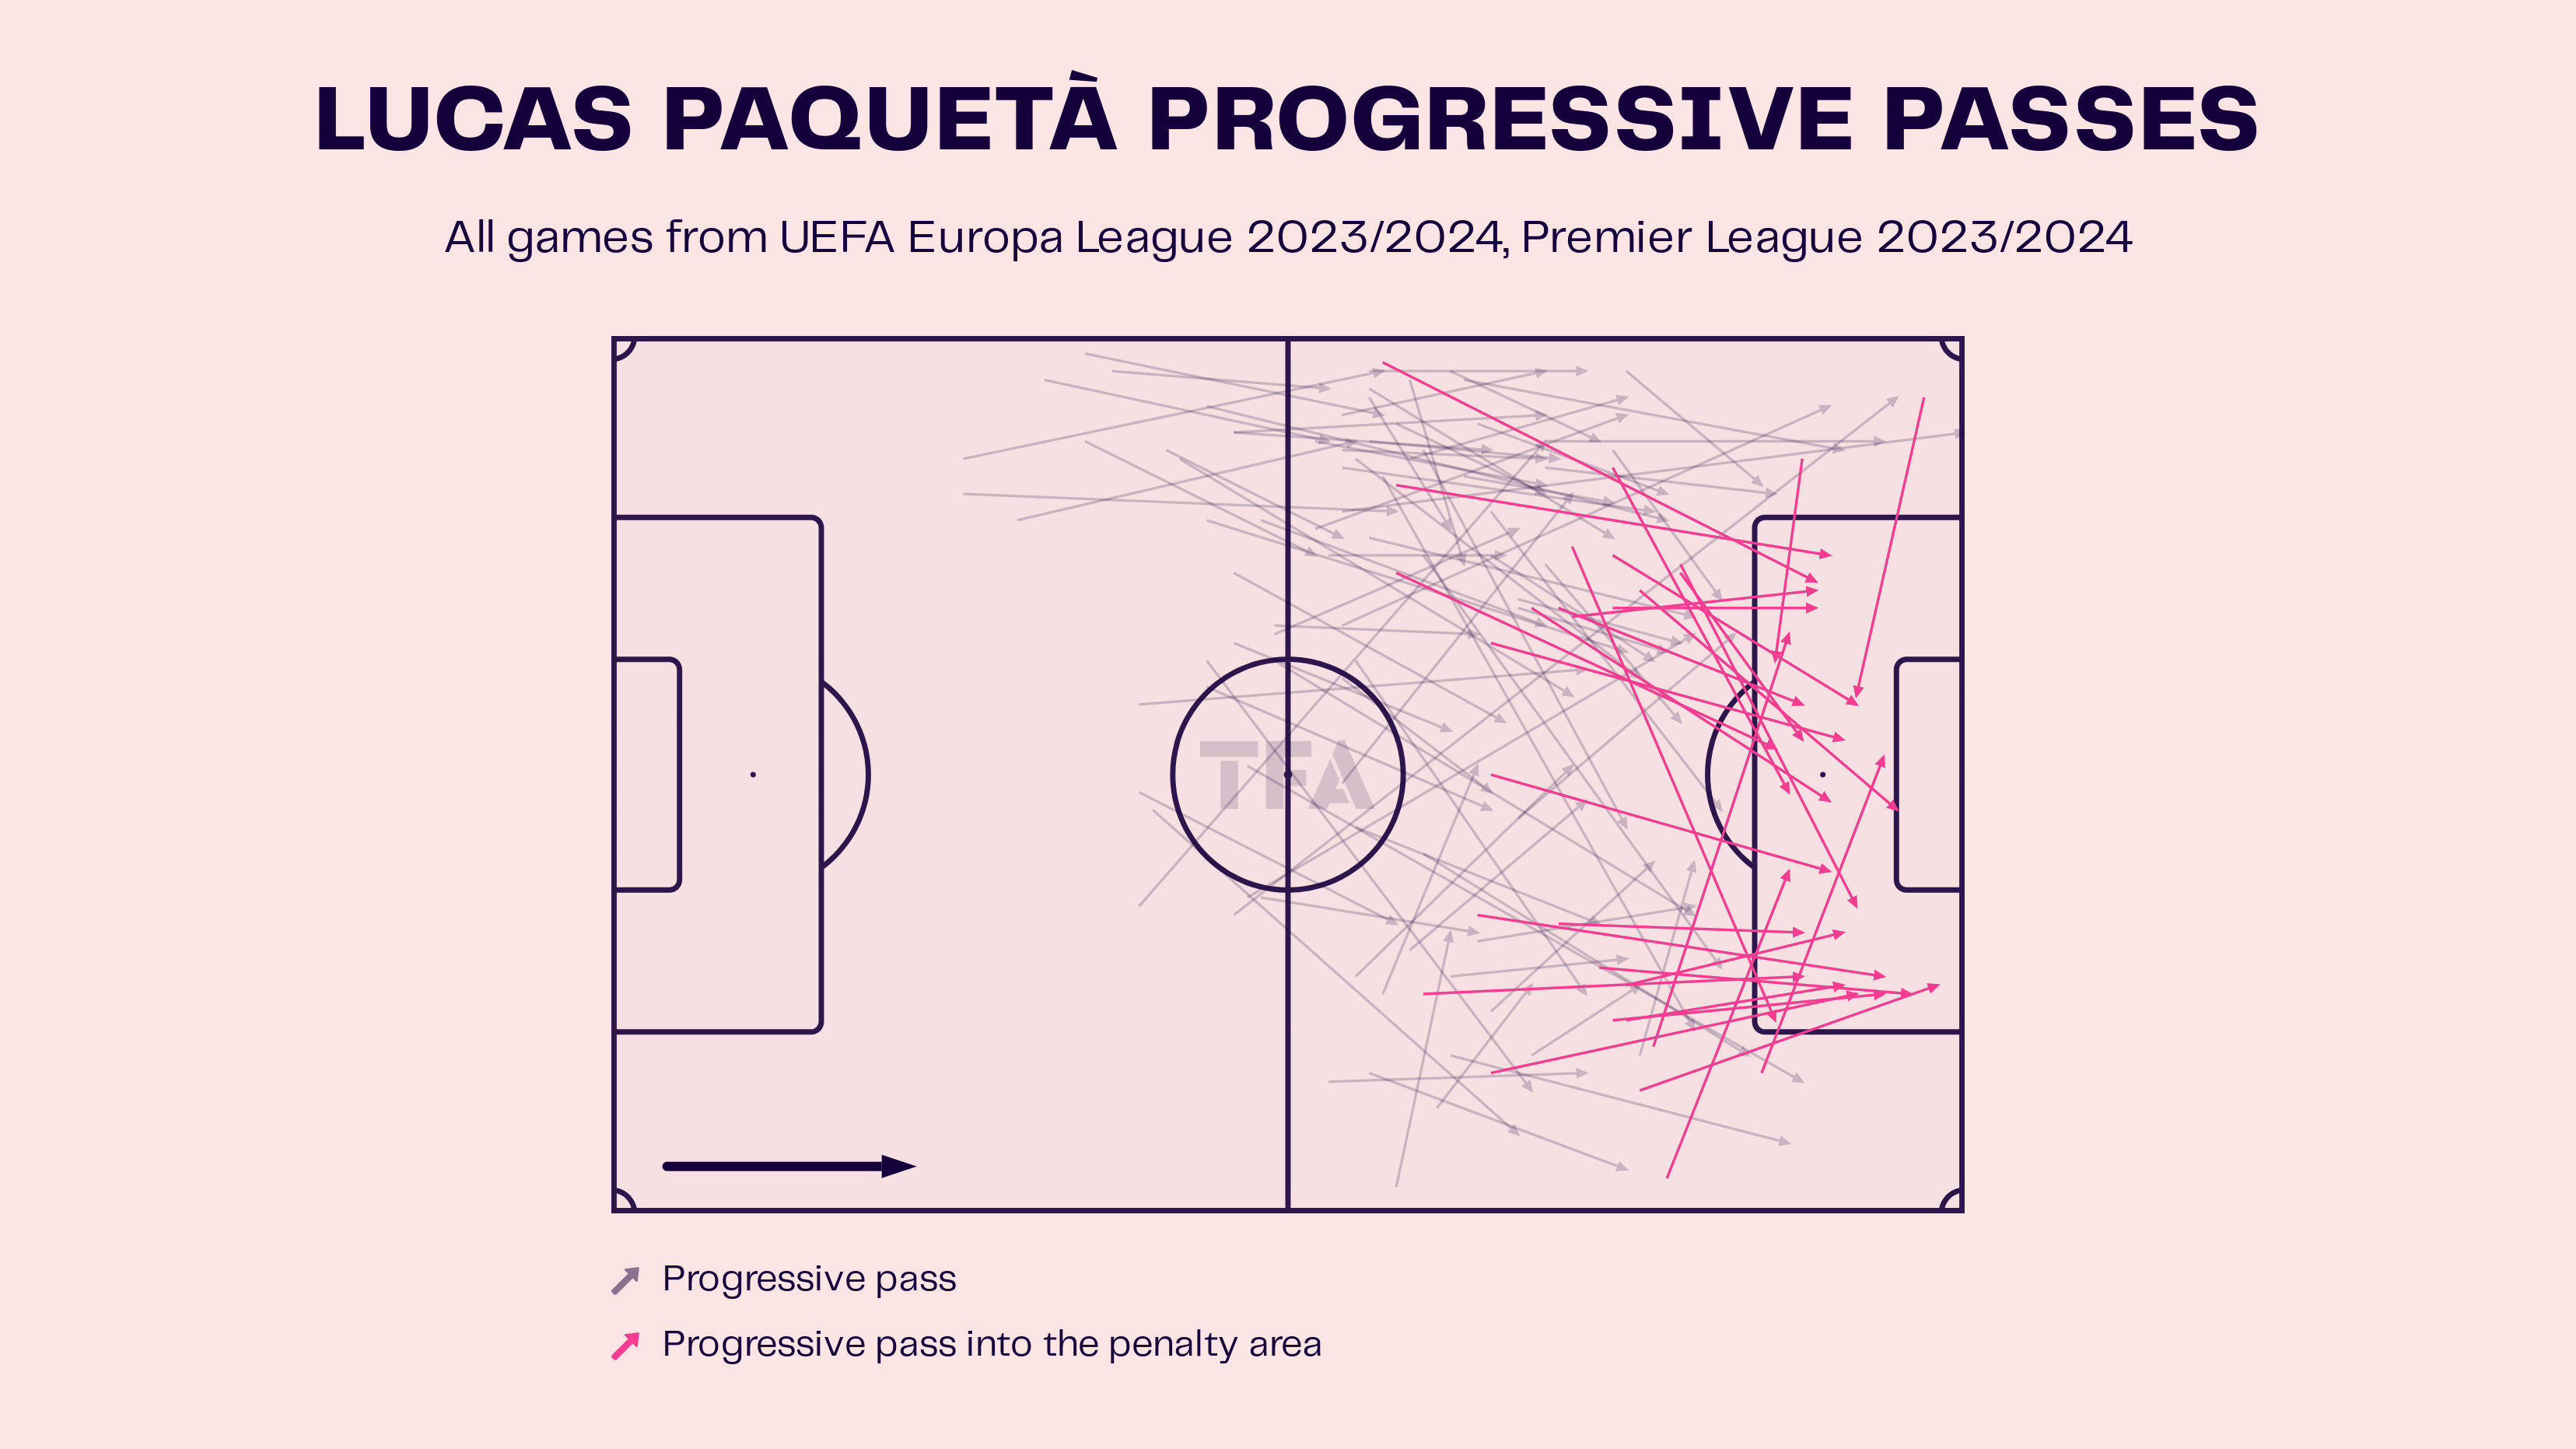 Brazilian brilliance: How Paqueta’s magic makes West Ham top contenders in Europe